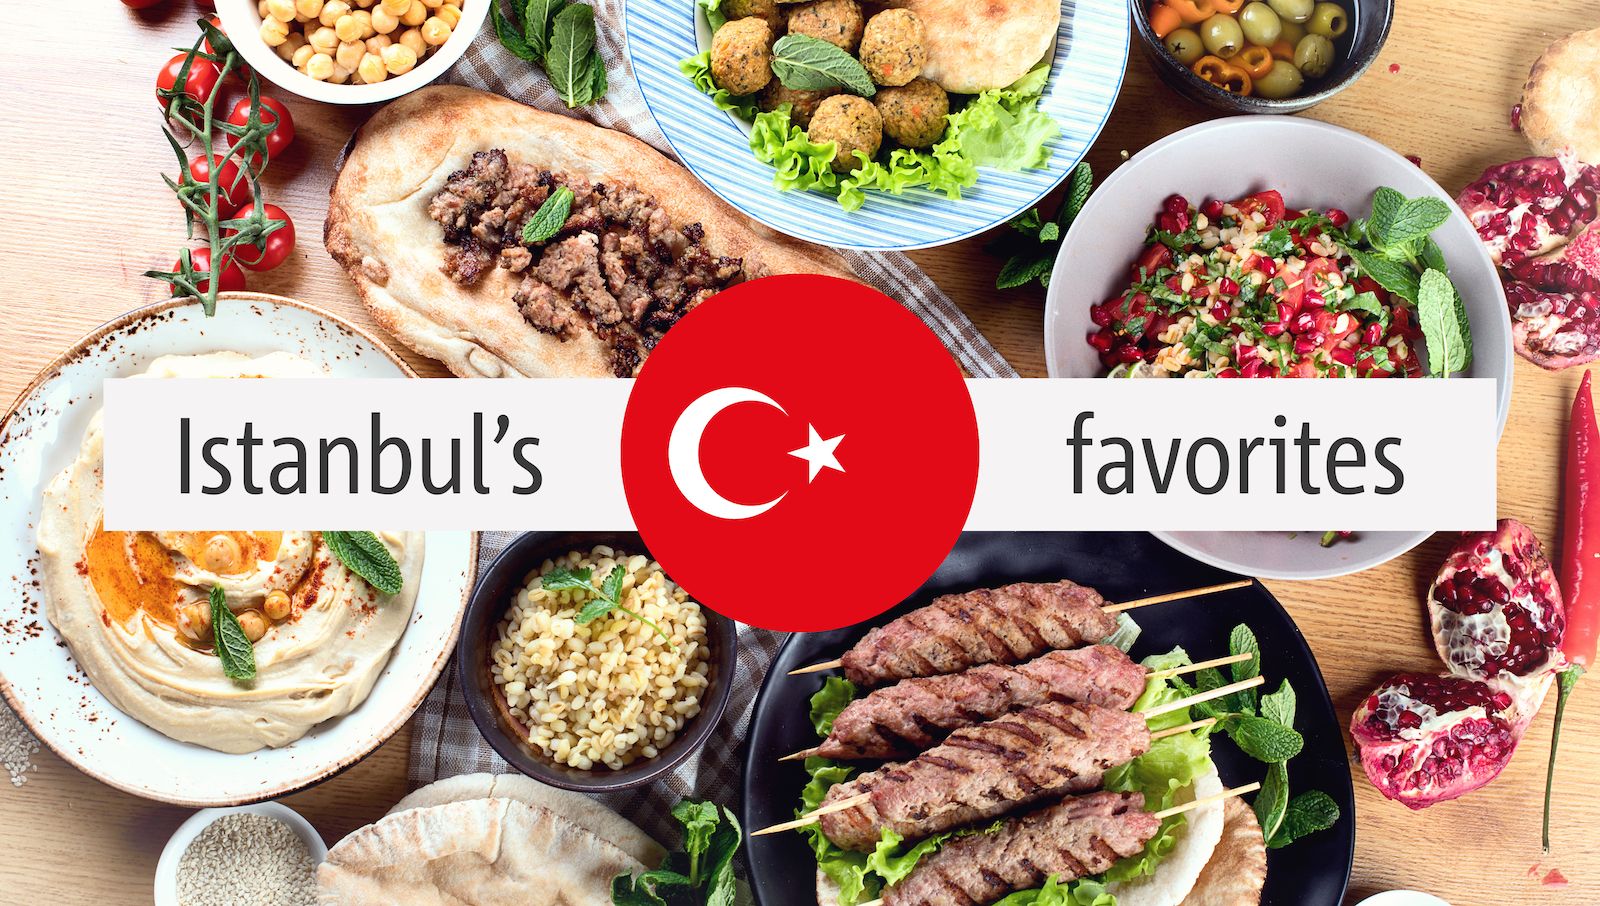 Chocolate soufflé and wet hamburgers: exploring Istanbul’s food scene